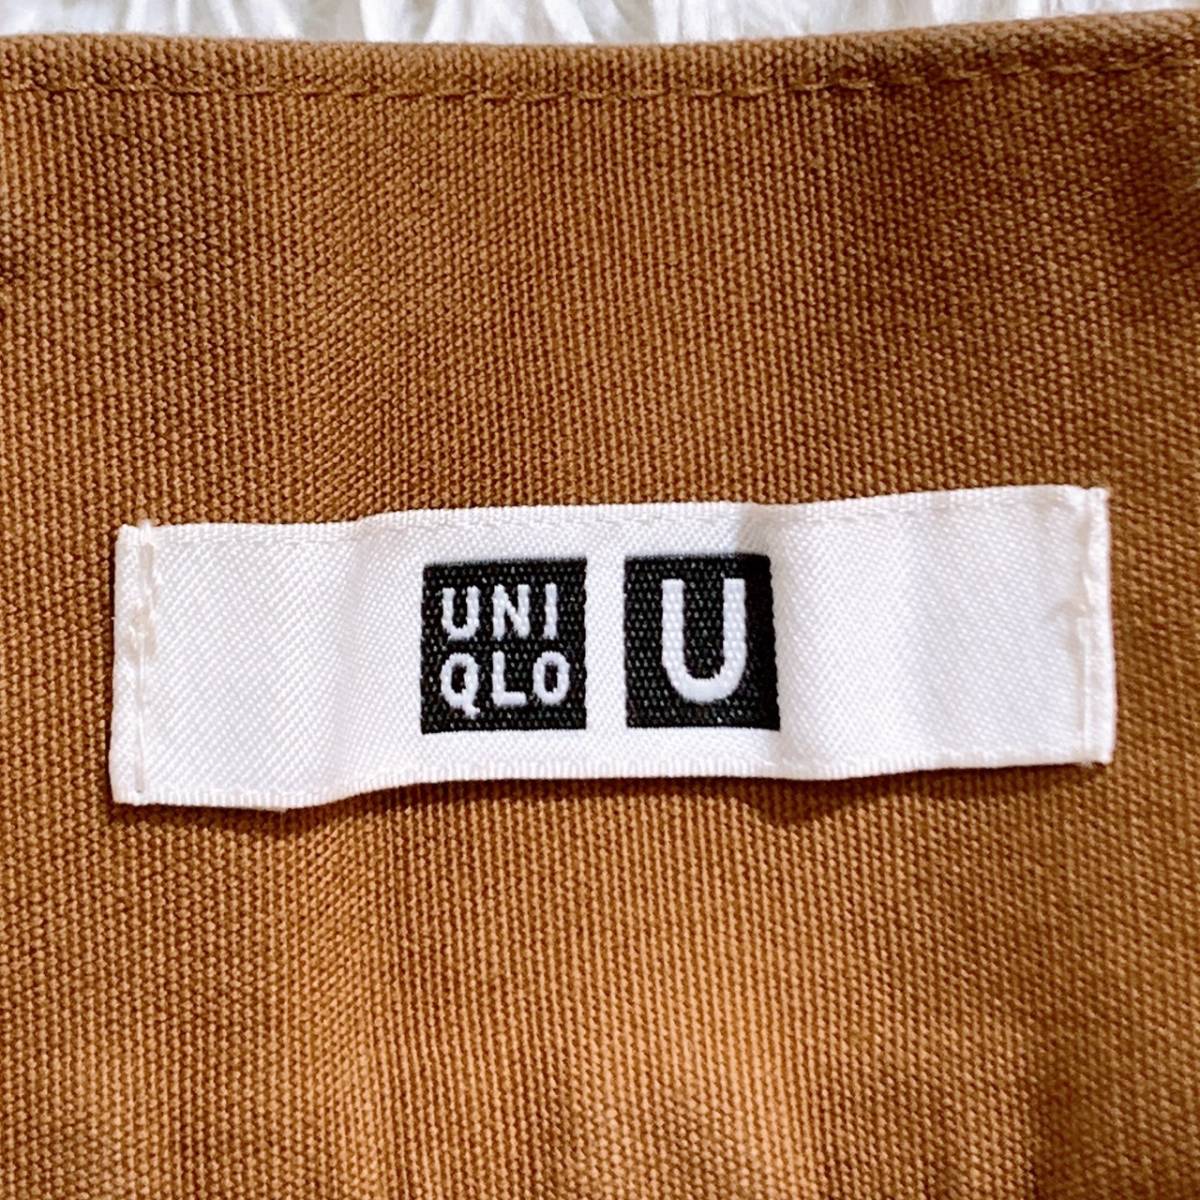 【22045】 UNIQLO ユニクロ ワイドデニムパンツ M 茶色 ブラウン 女性用 レディース カジュアル ベルト付き